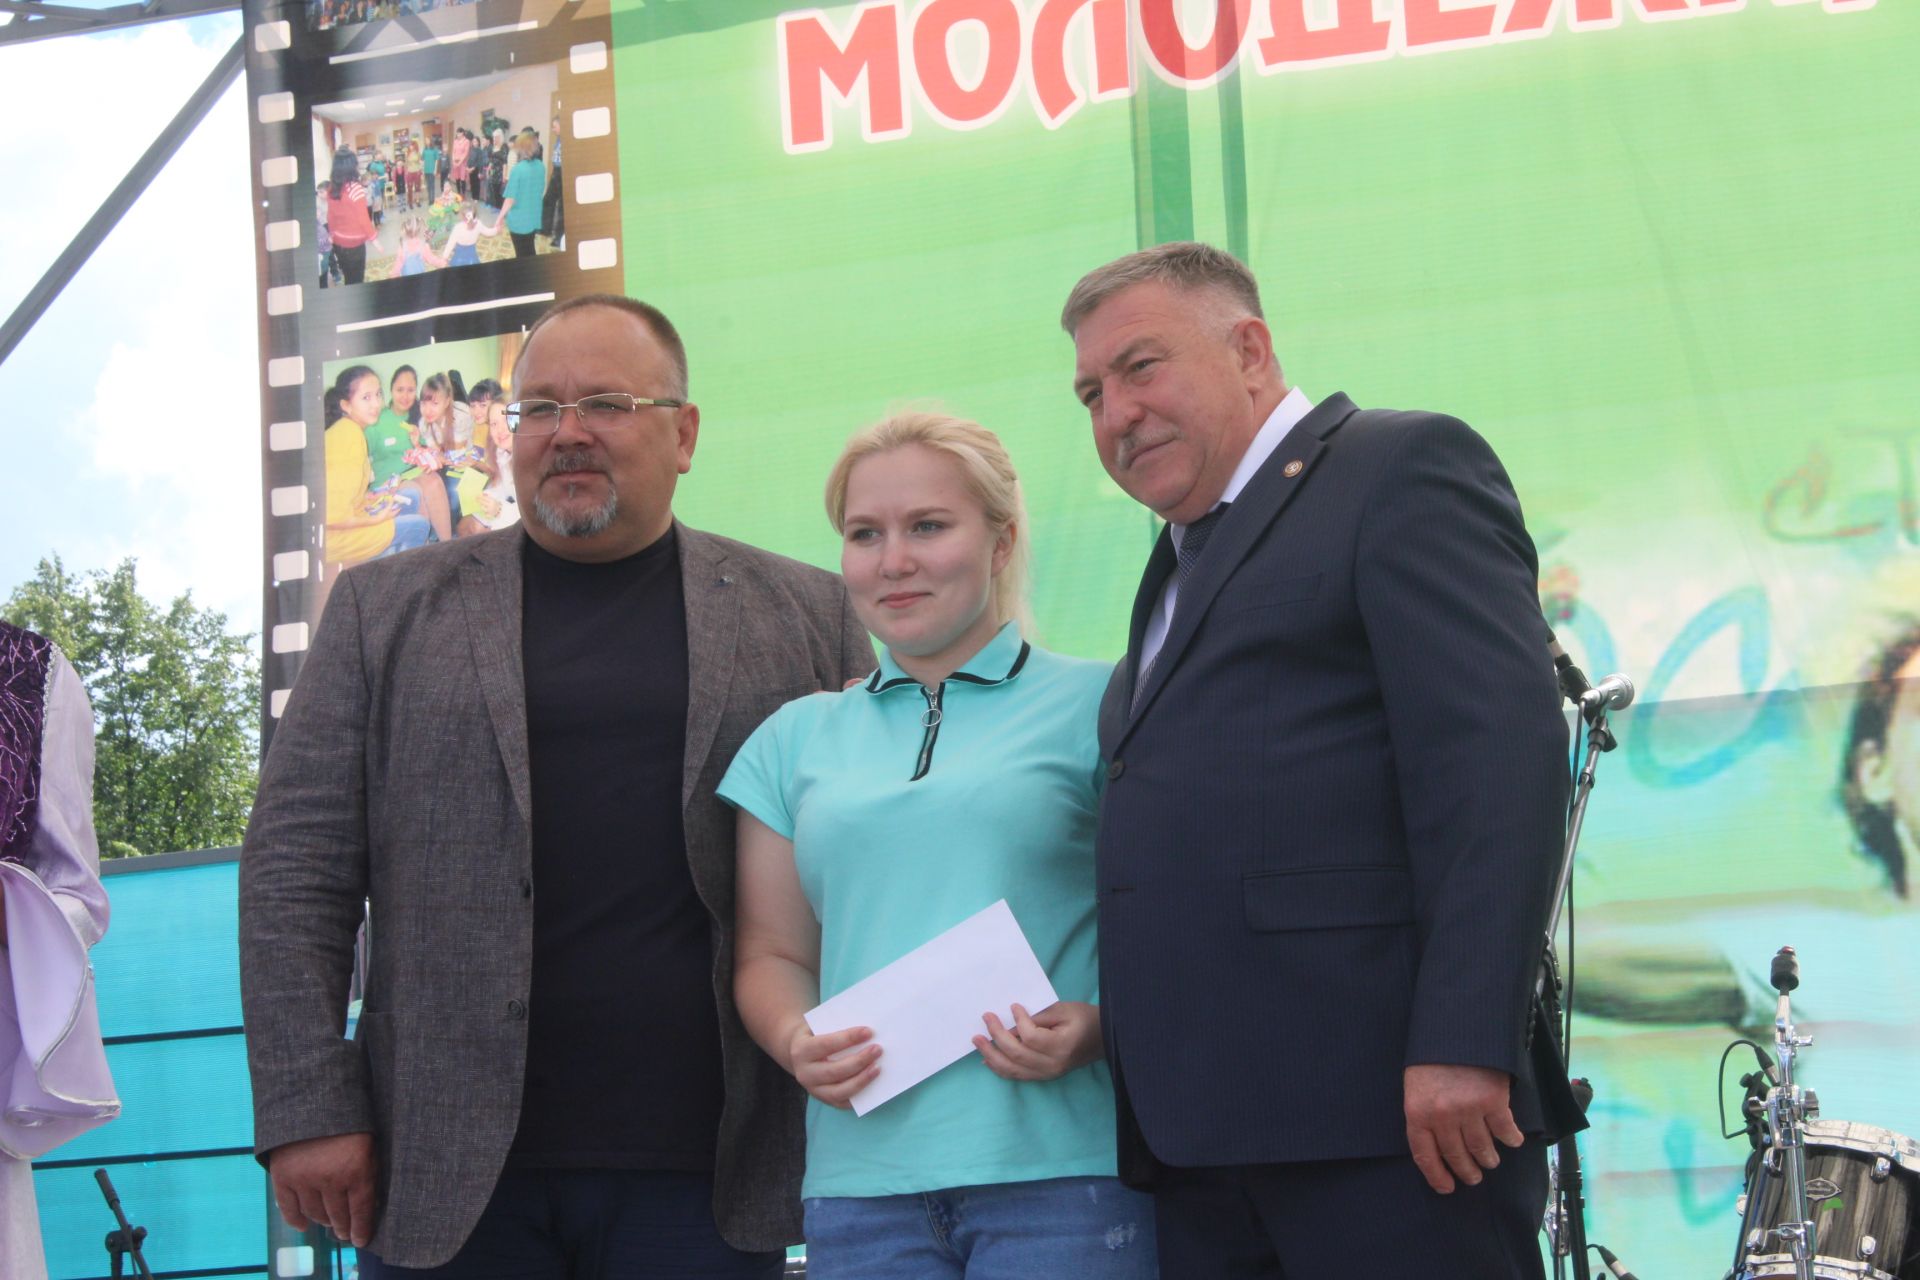 Лениногорскига WorldSkills һәм WorldSkills Kazan 2019 флагы килде (Фотолар)